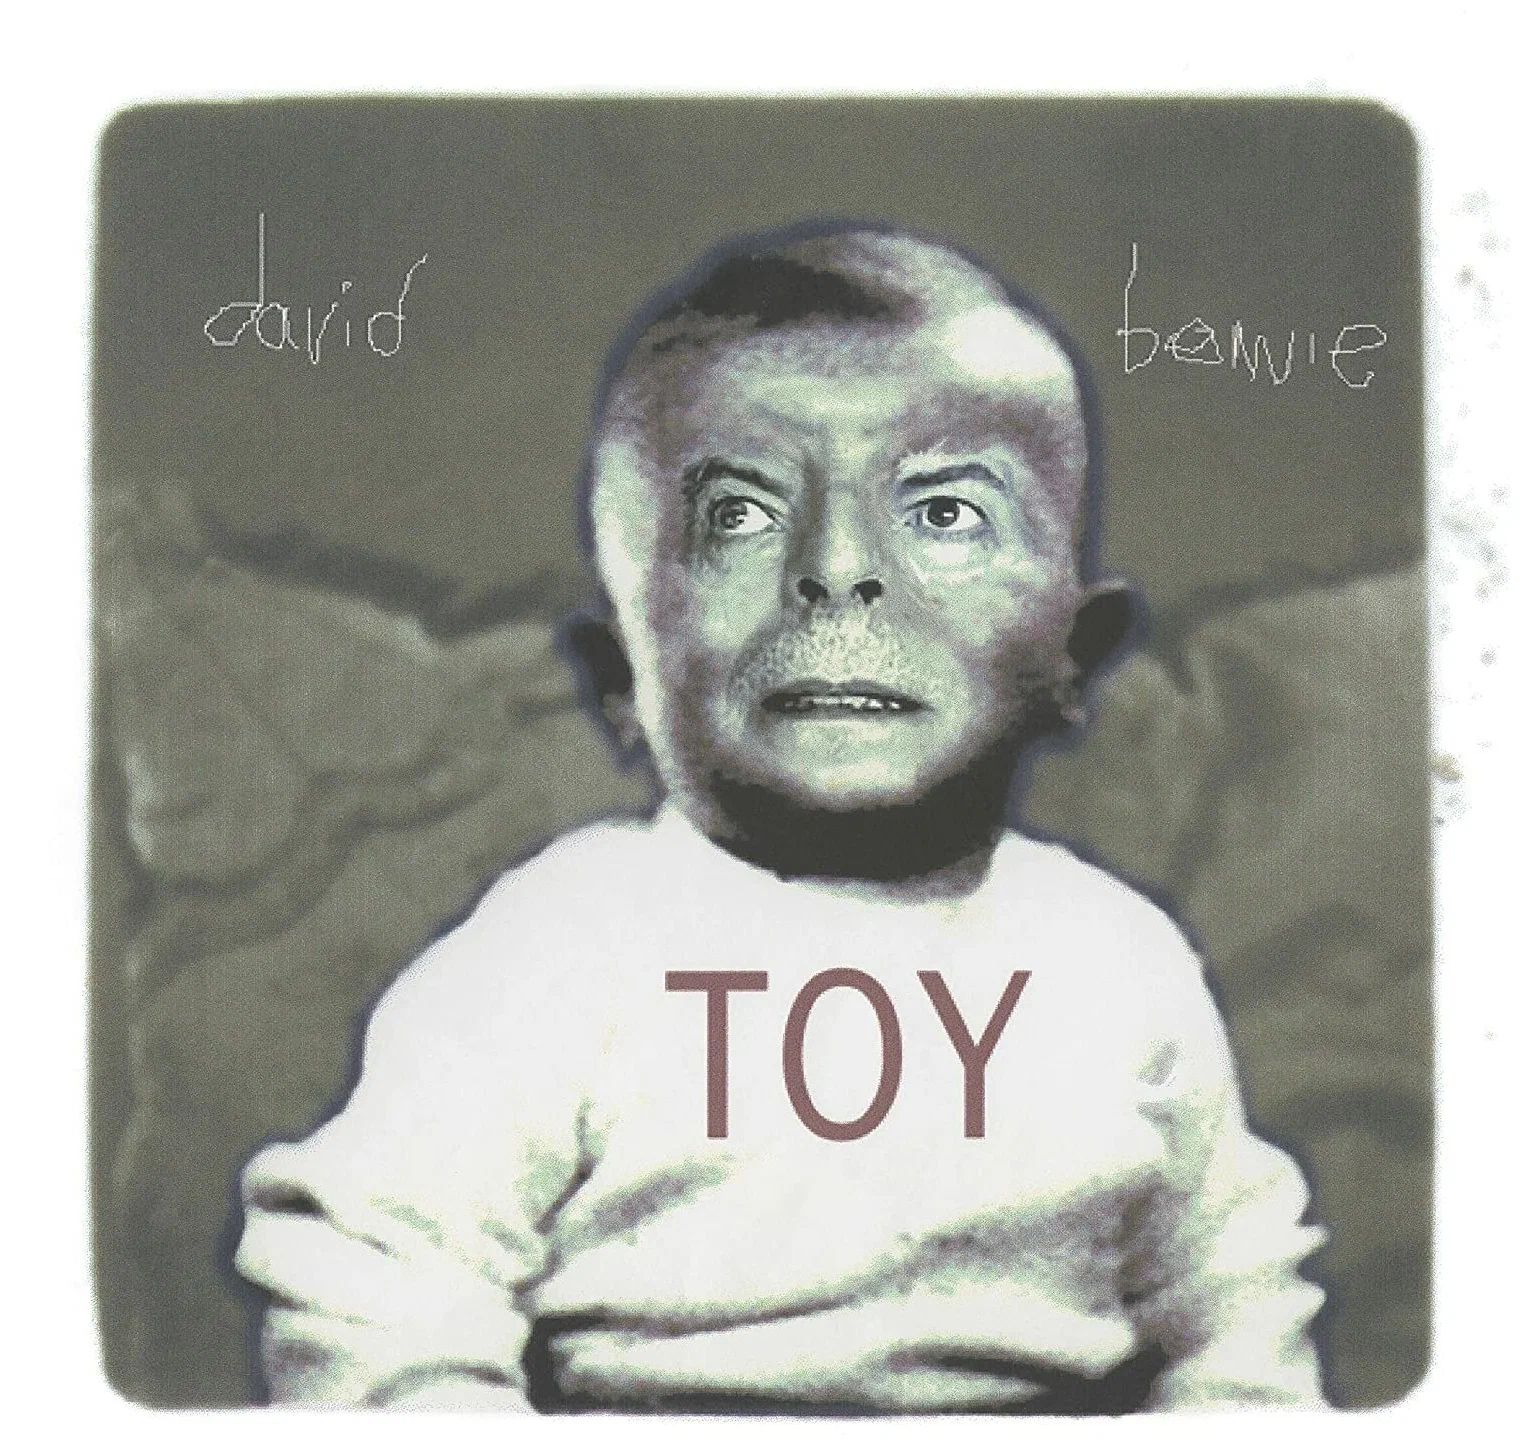 Виниловая Пластинка Bowie, David Toy (0190295253257) виниловая пластинка bowie david scary monsters and super creeps remastered 0190295842611